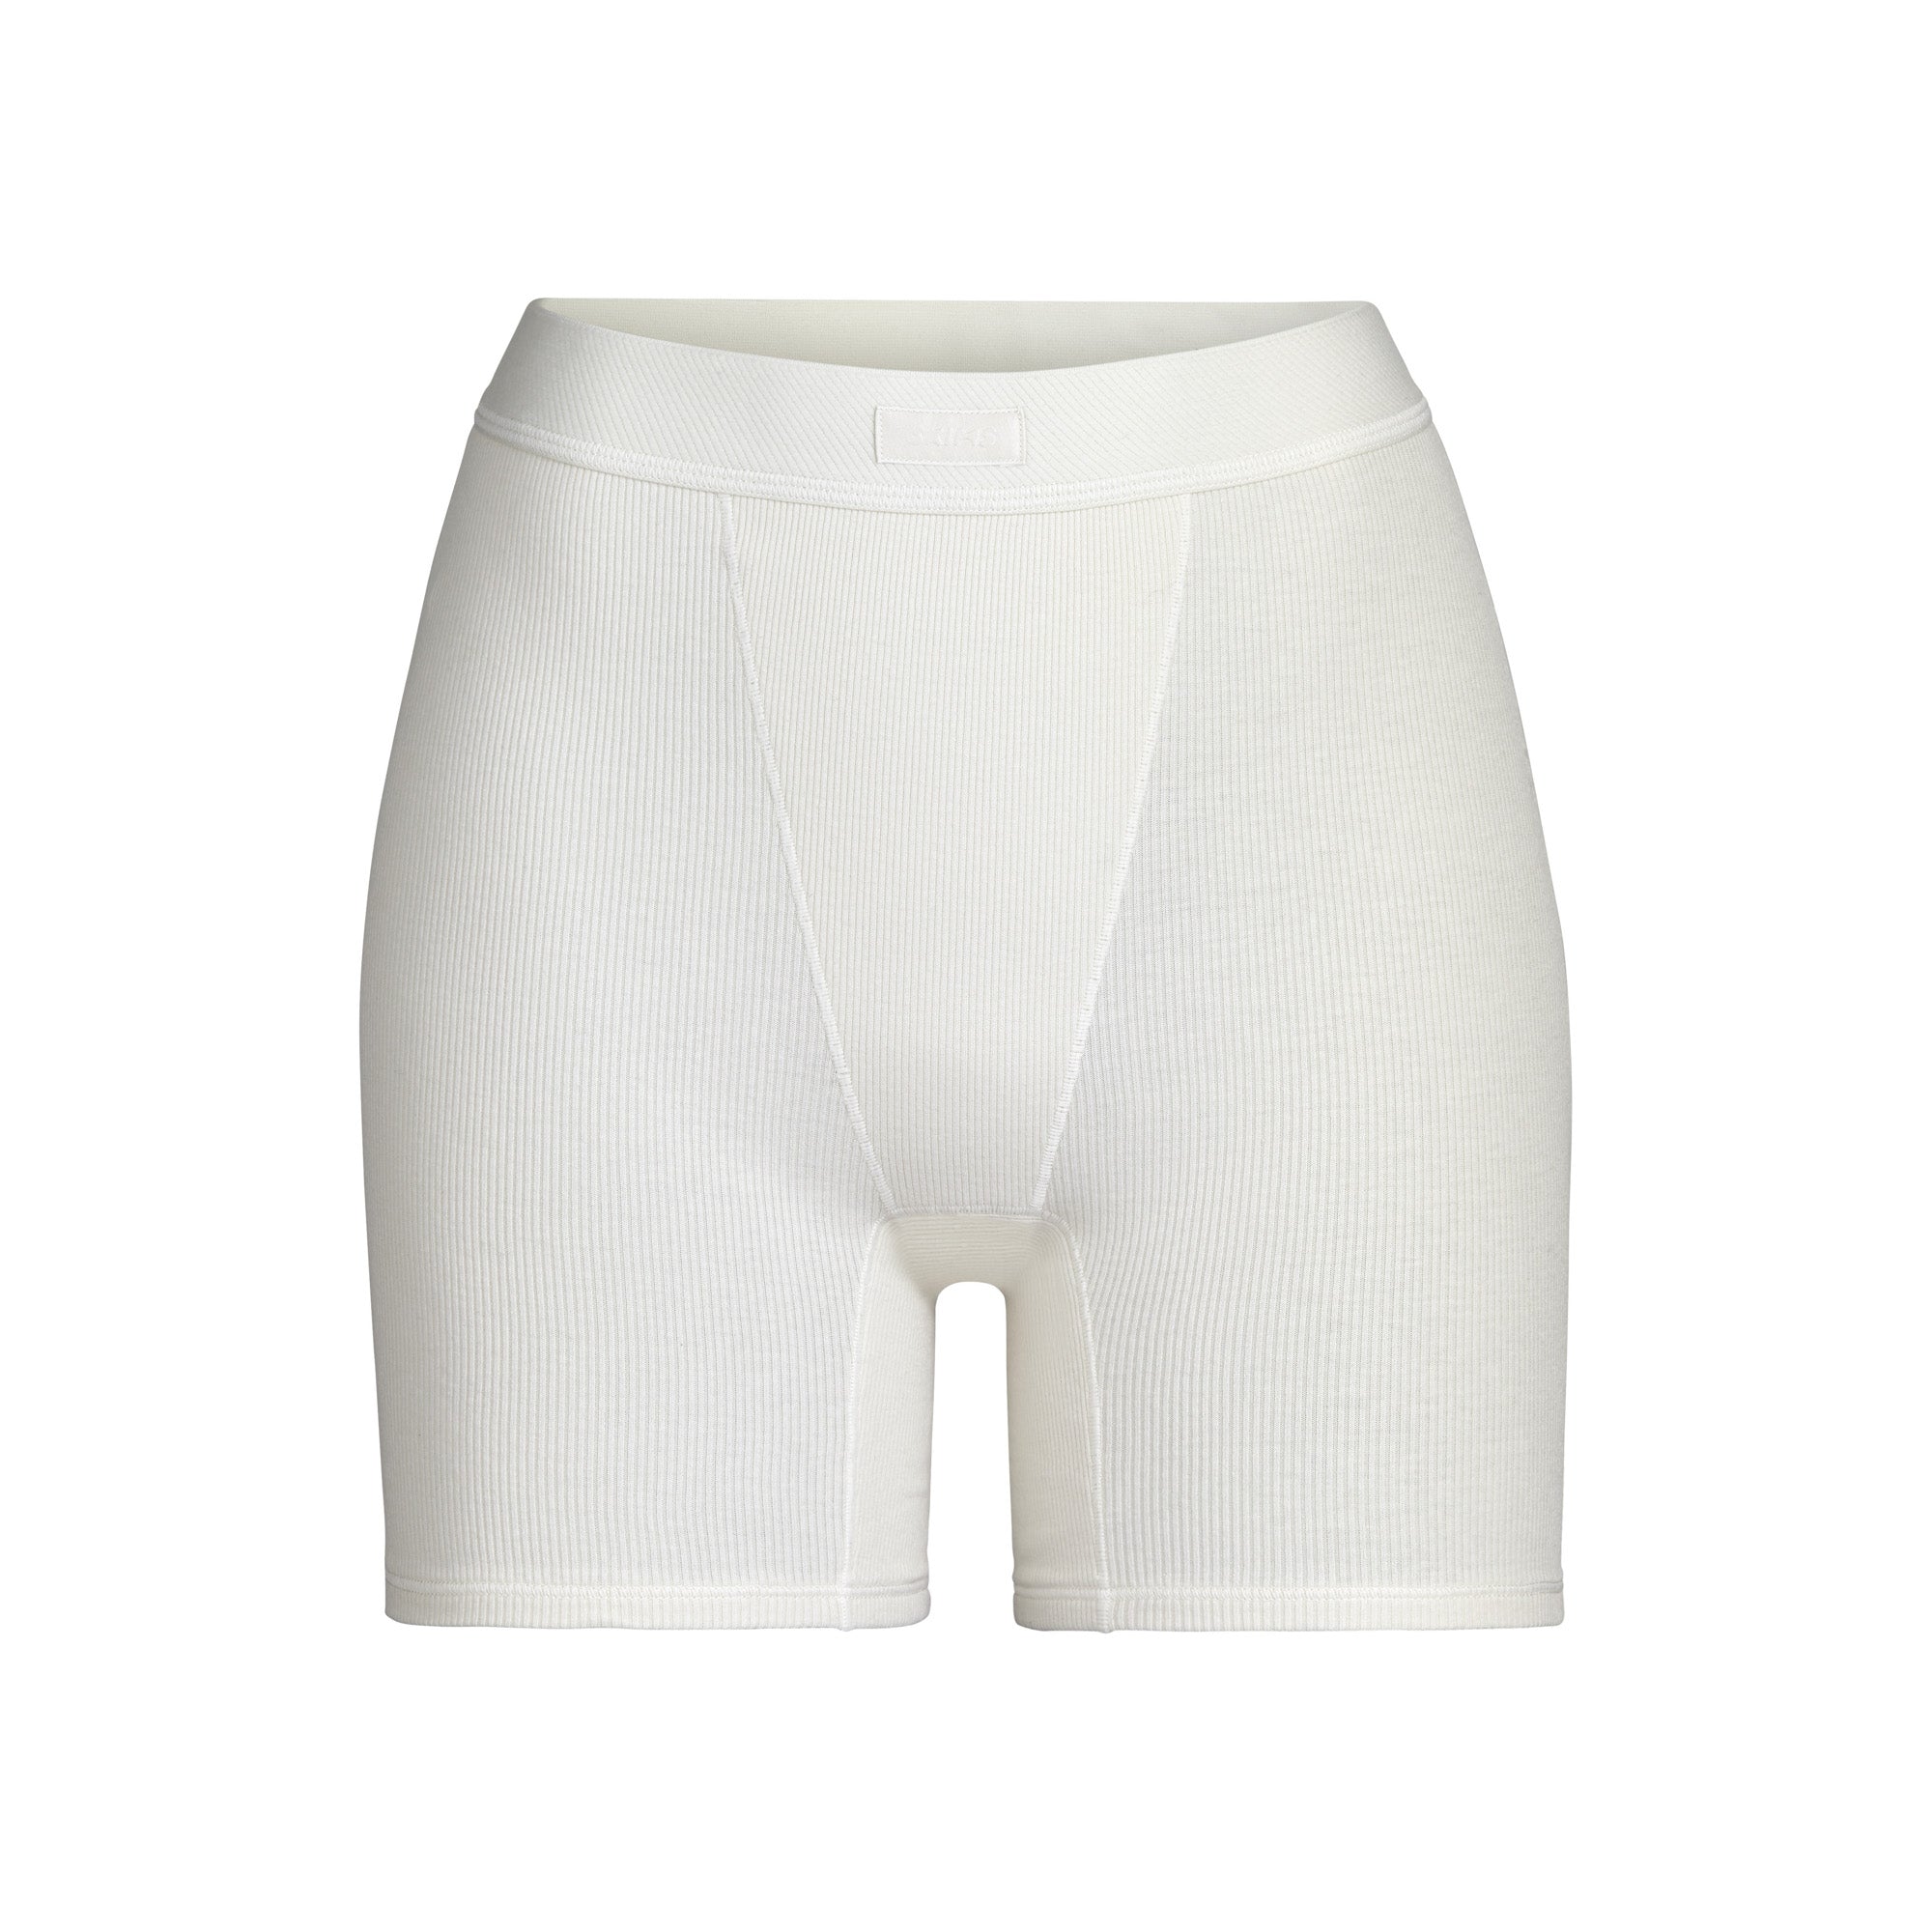 Laura Ashley, Intimates & Sleepwear, Laura Ashley Womens Brief Underwear  Panties Plus Size 2x 2 X Nwt New 5 Pack